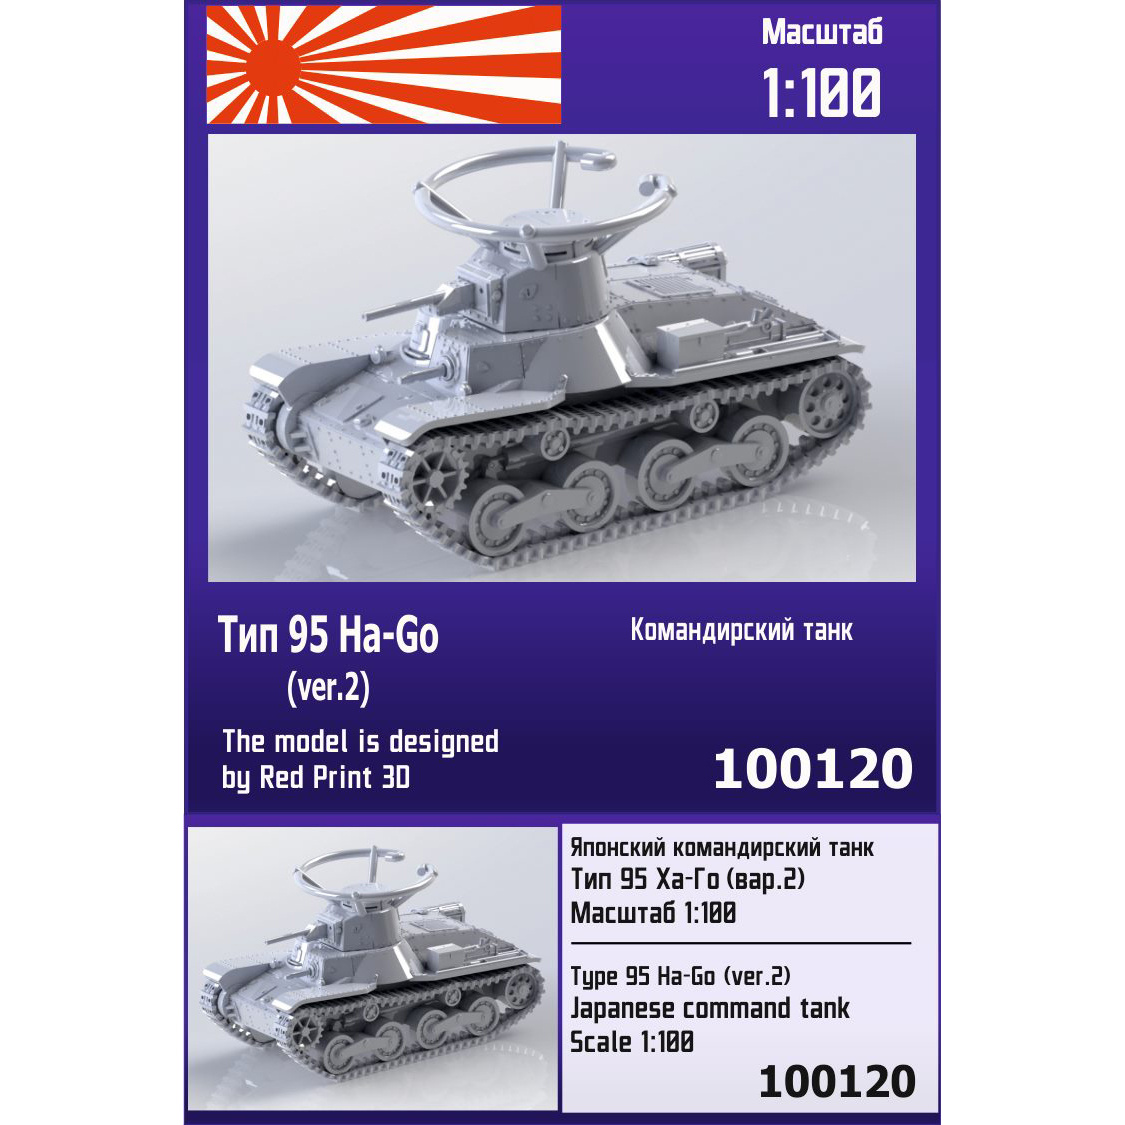 100120  техника и вооружение  Японский командирский танк Тип 95 Ha-Go (вар. 2)  (1:100)